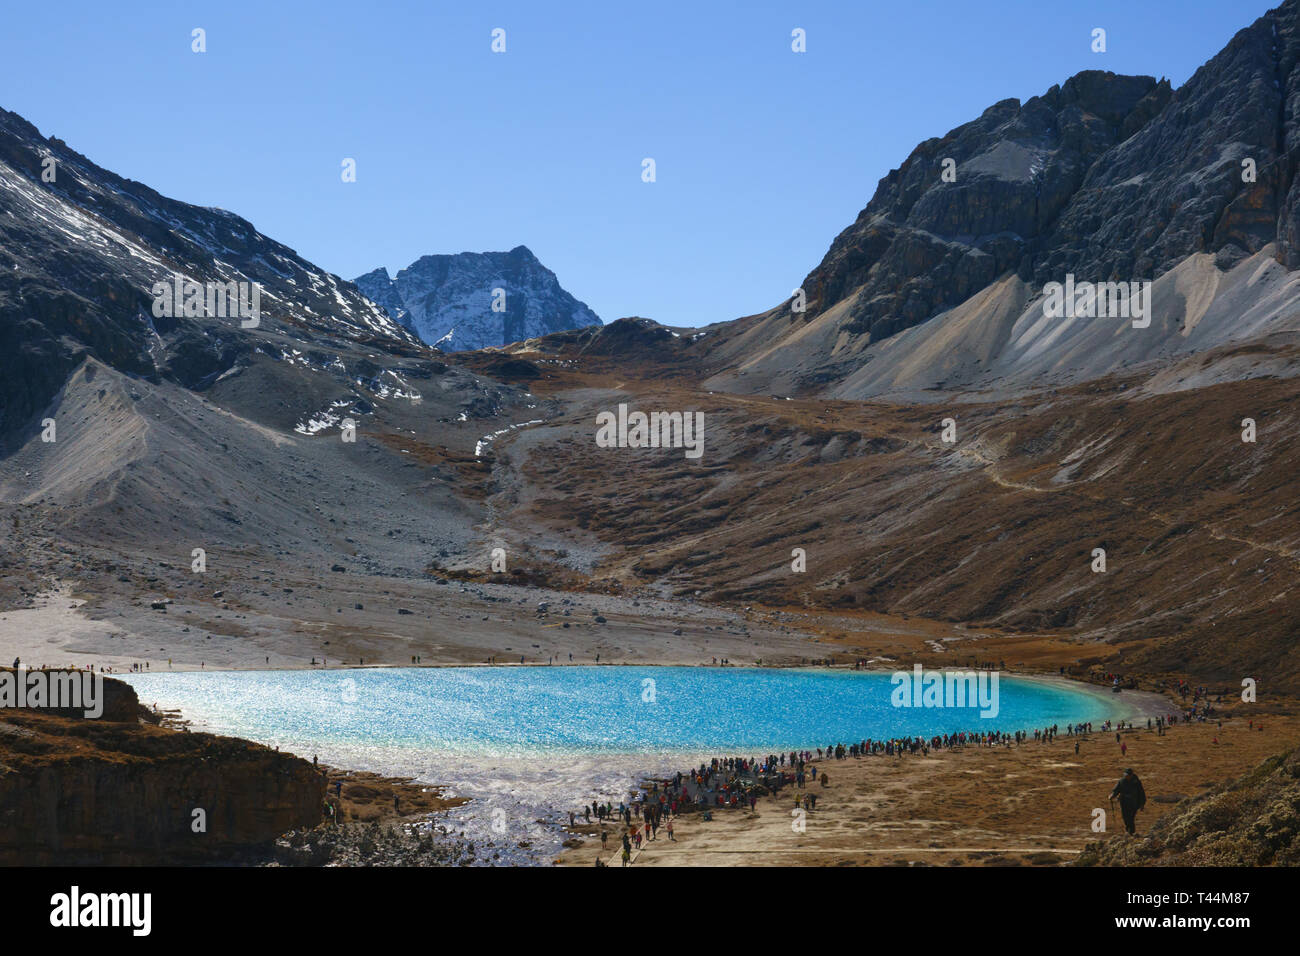 Natur Landschaft Bild, Schnee, Berg in daocheng yading, Sichuan, China Stockfoto